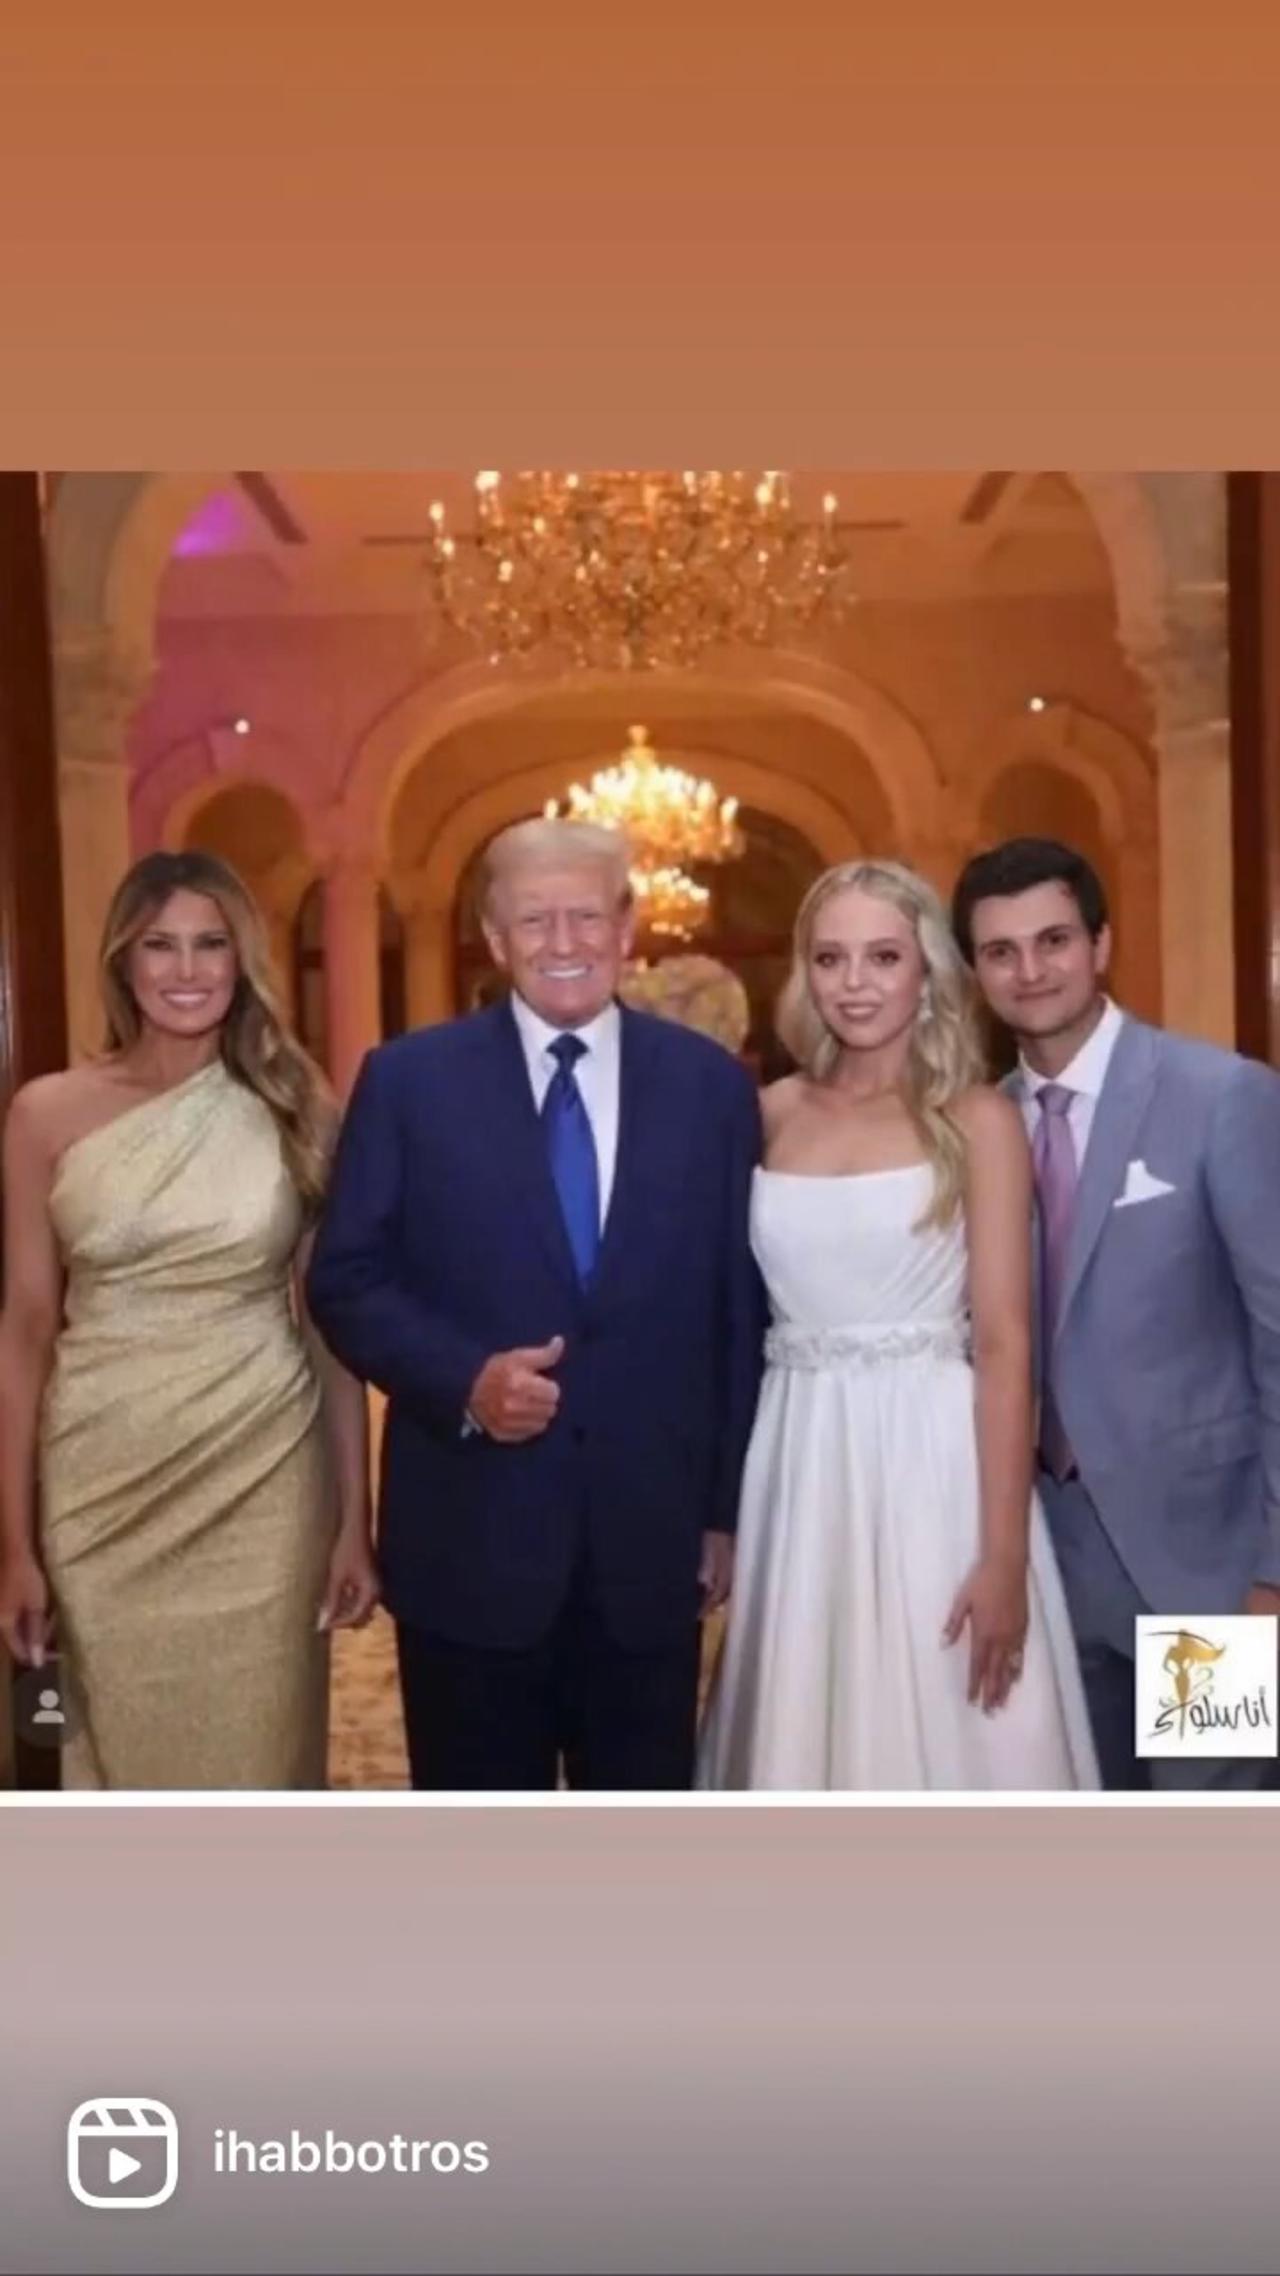 Tiffany Trump and Michael Boulos wedding